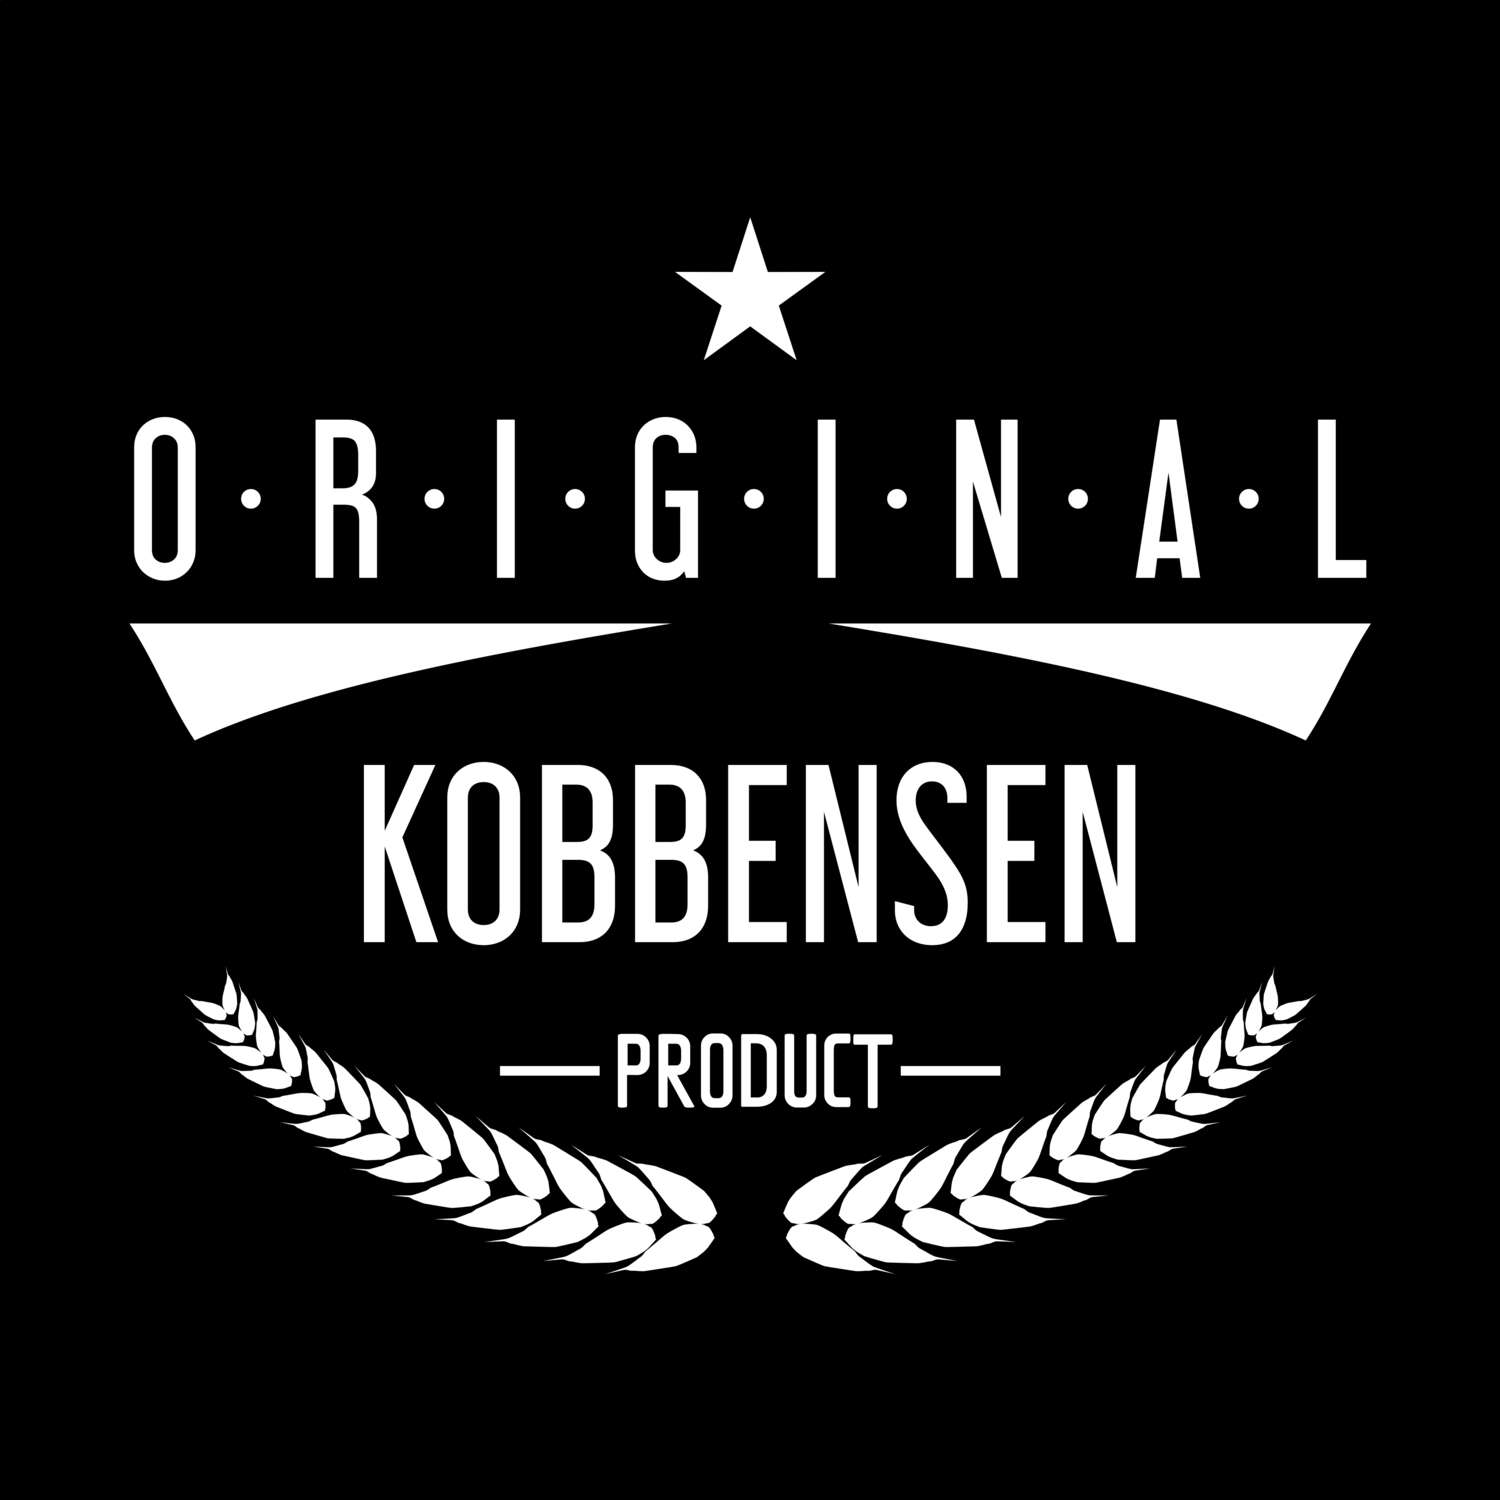 Kobbensen T-Shirt »Original Product«